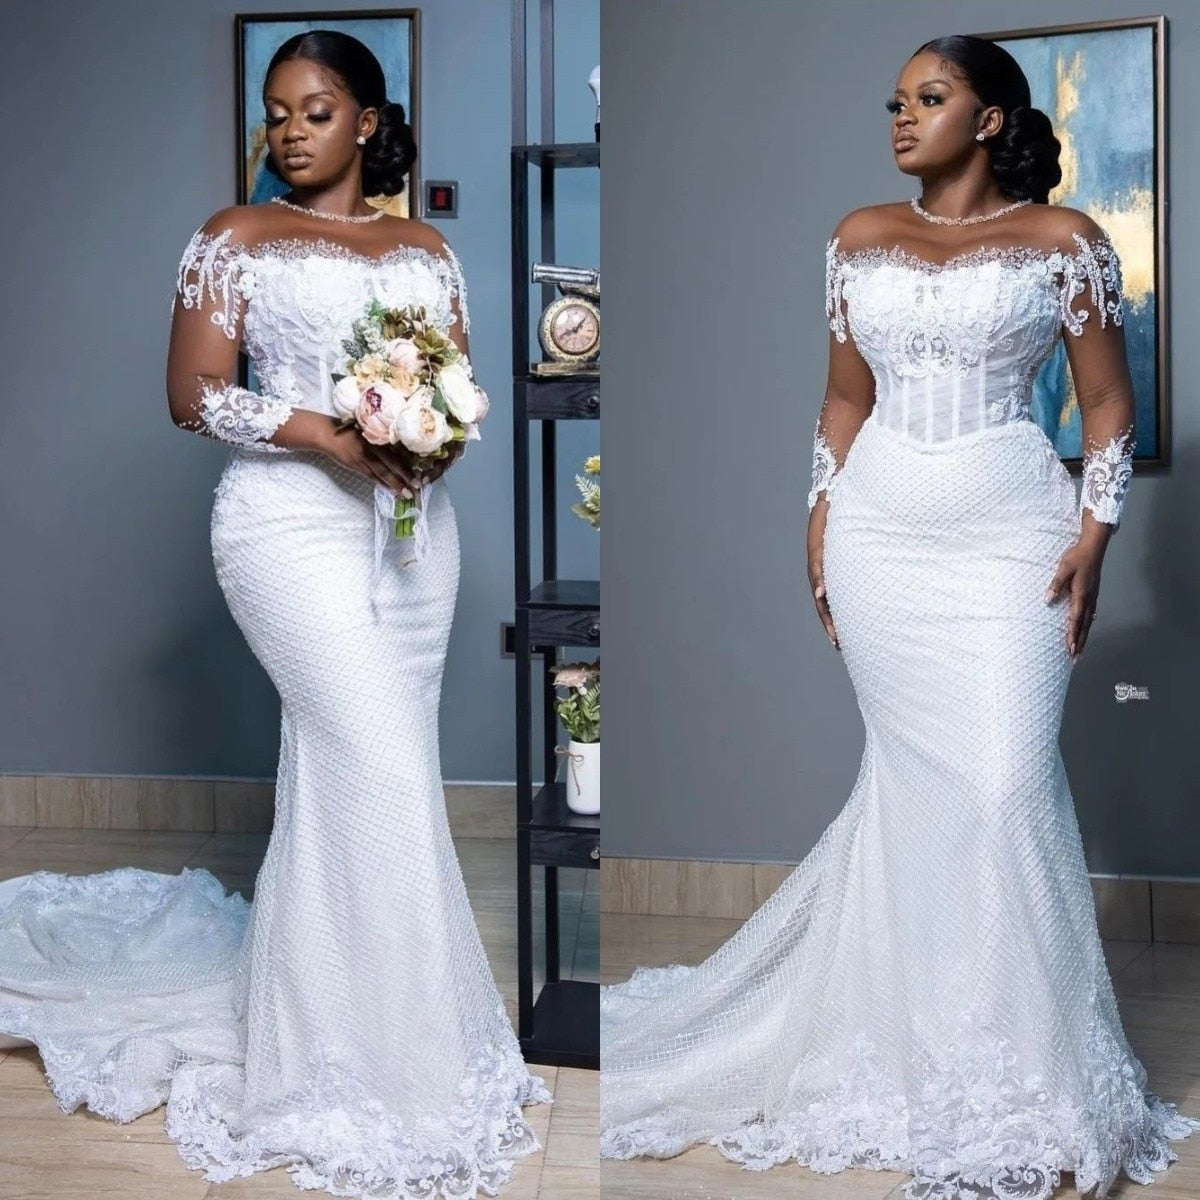 white reception dress for bride